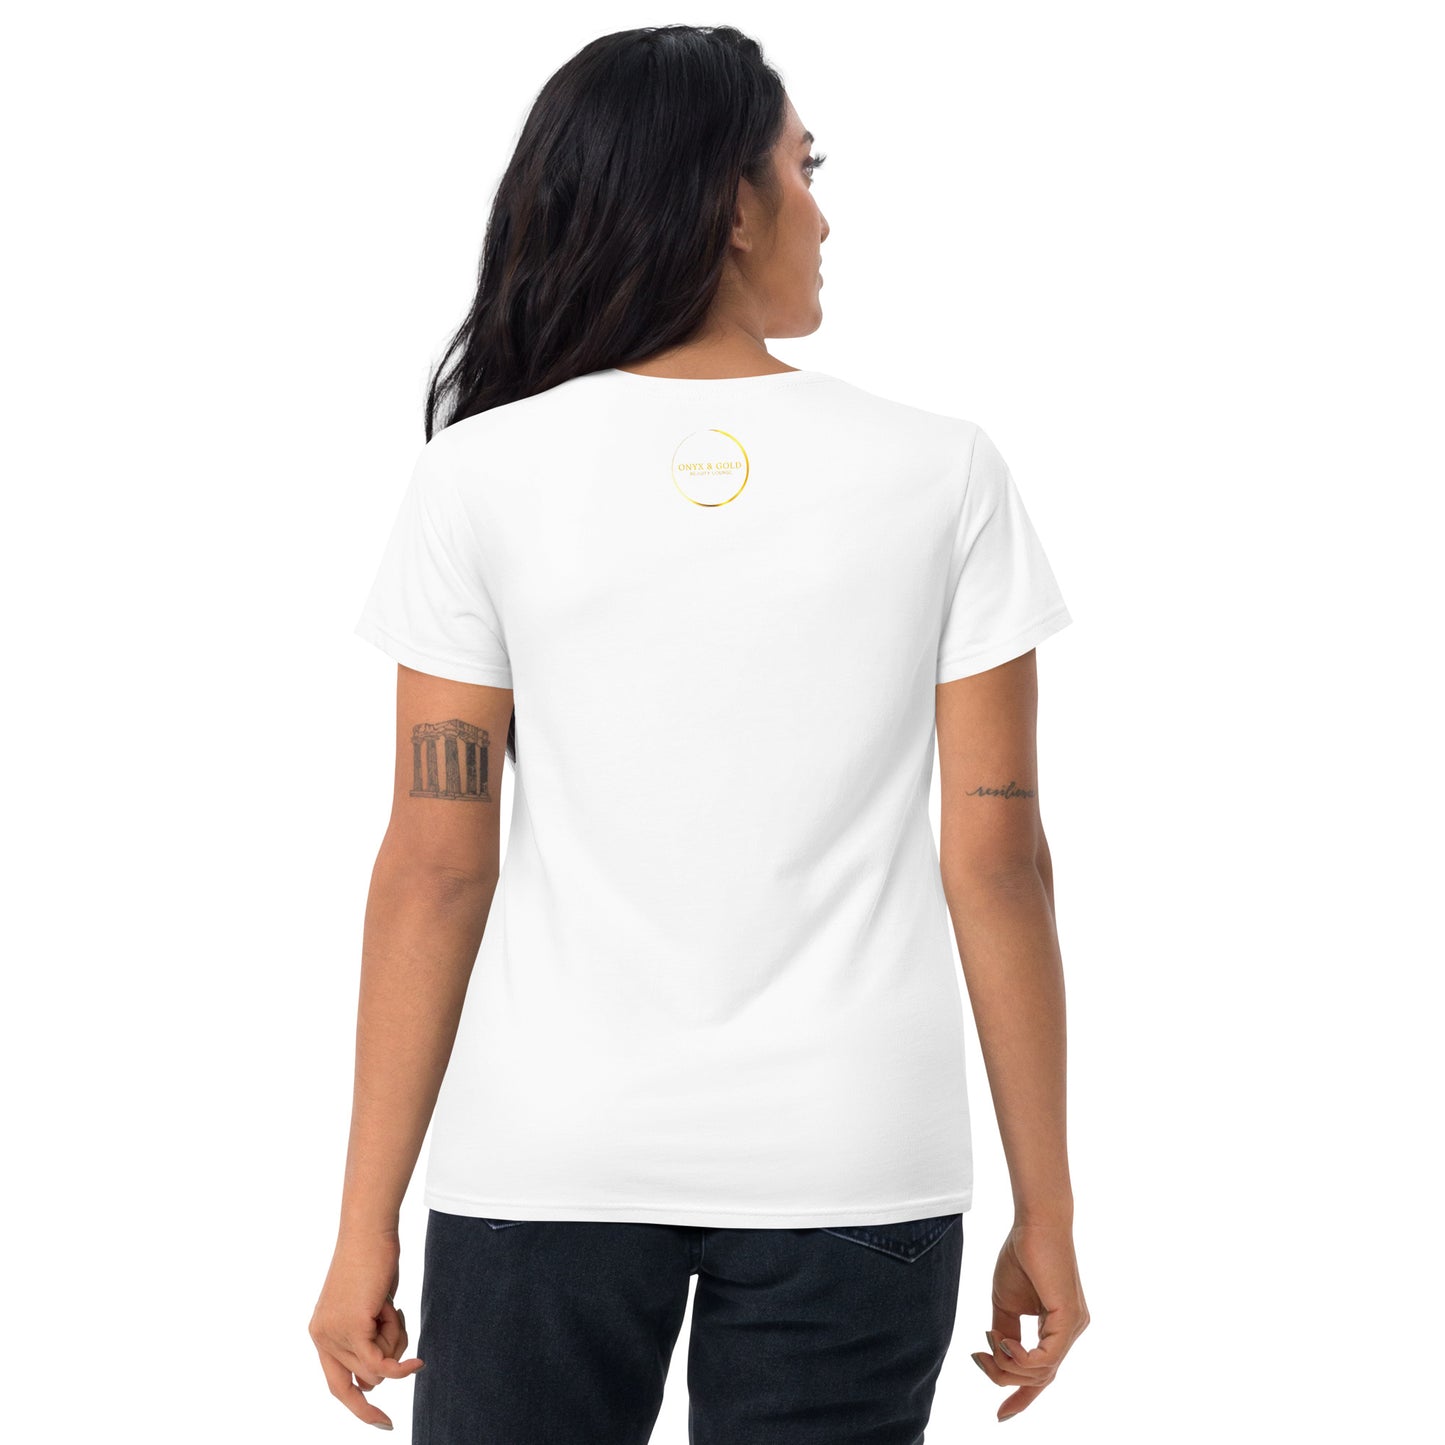 Onyx & Gold -Women's Fashion Fit T-Shirt | Gildan 880 - Gold Logo with logo on back